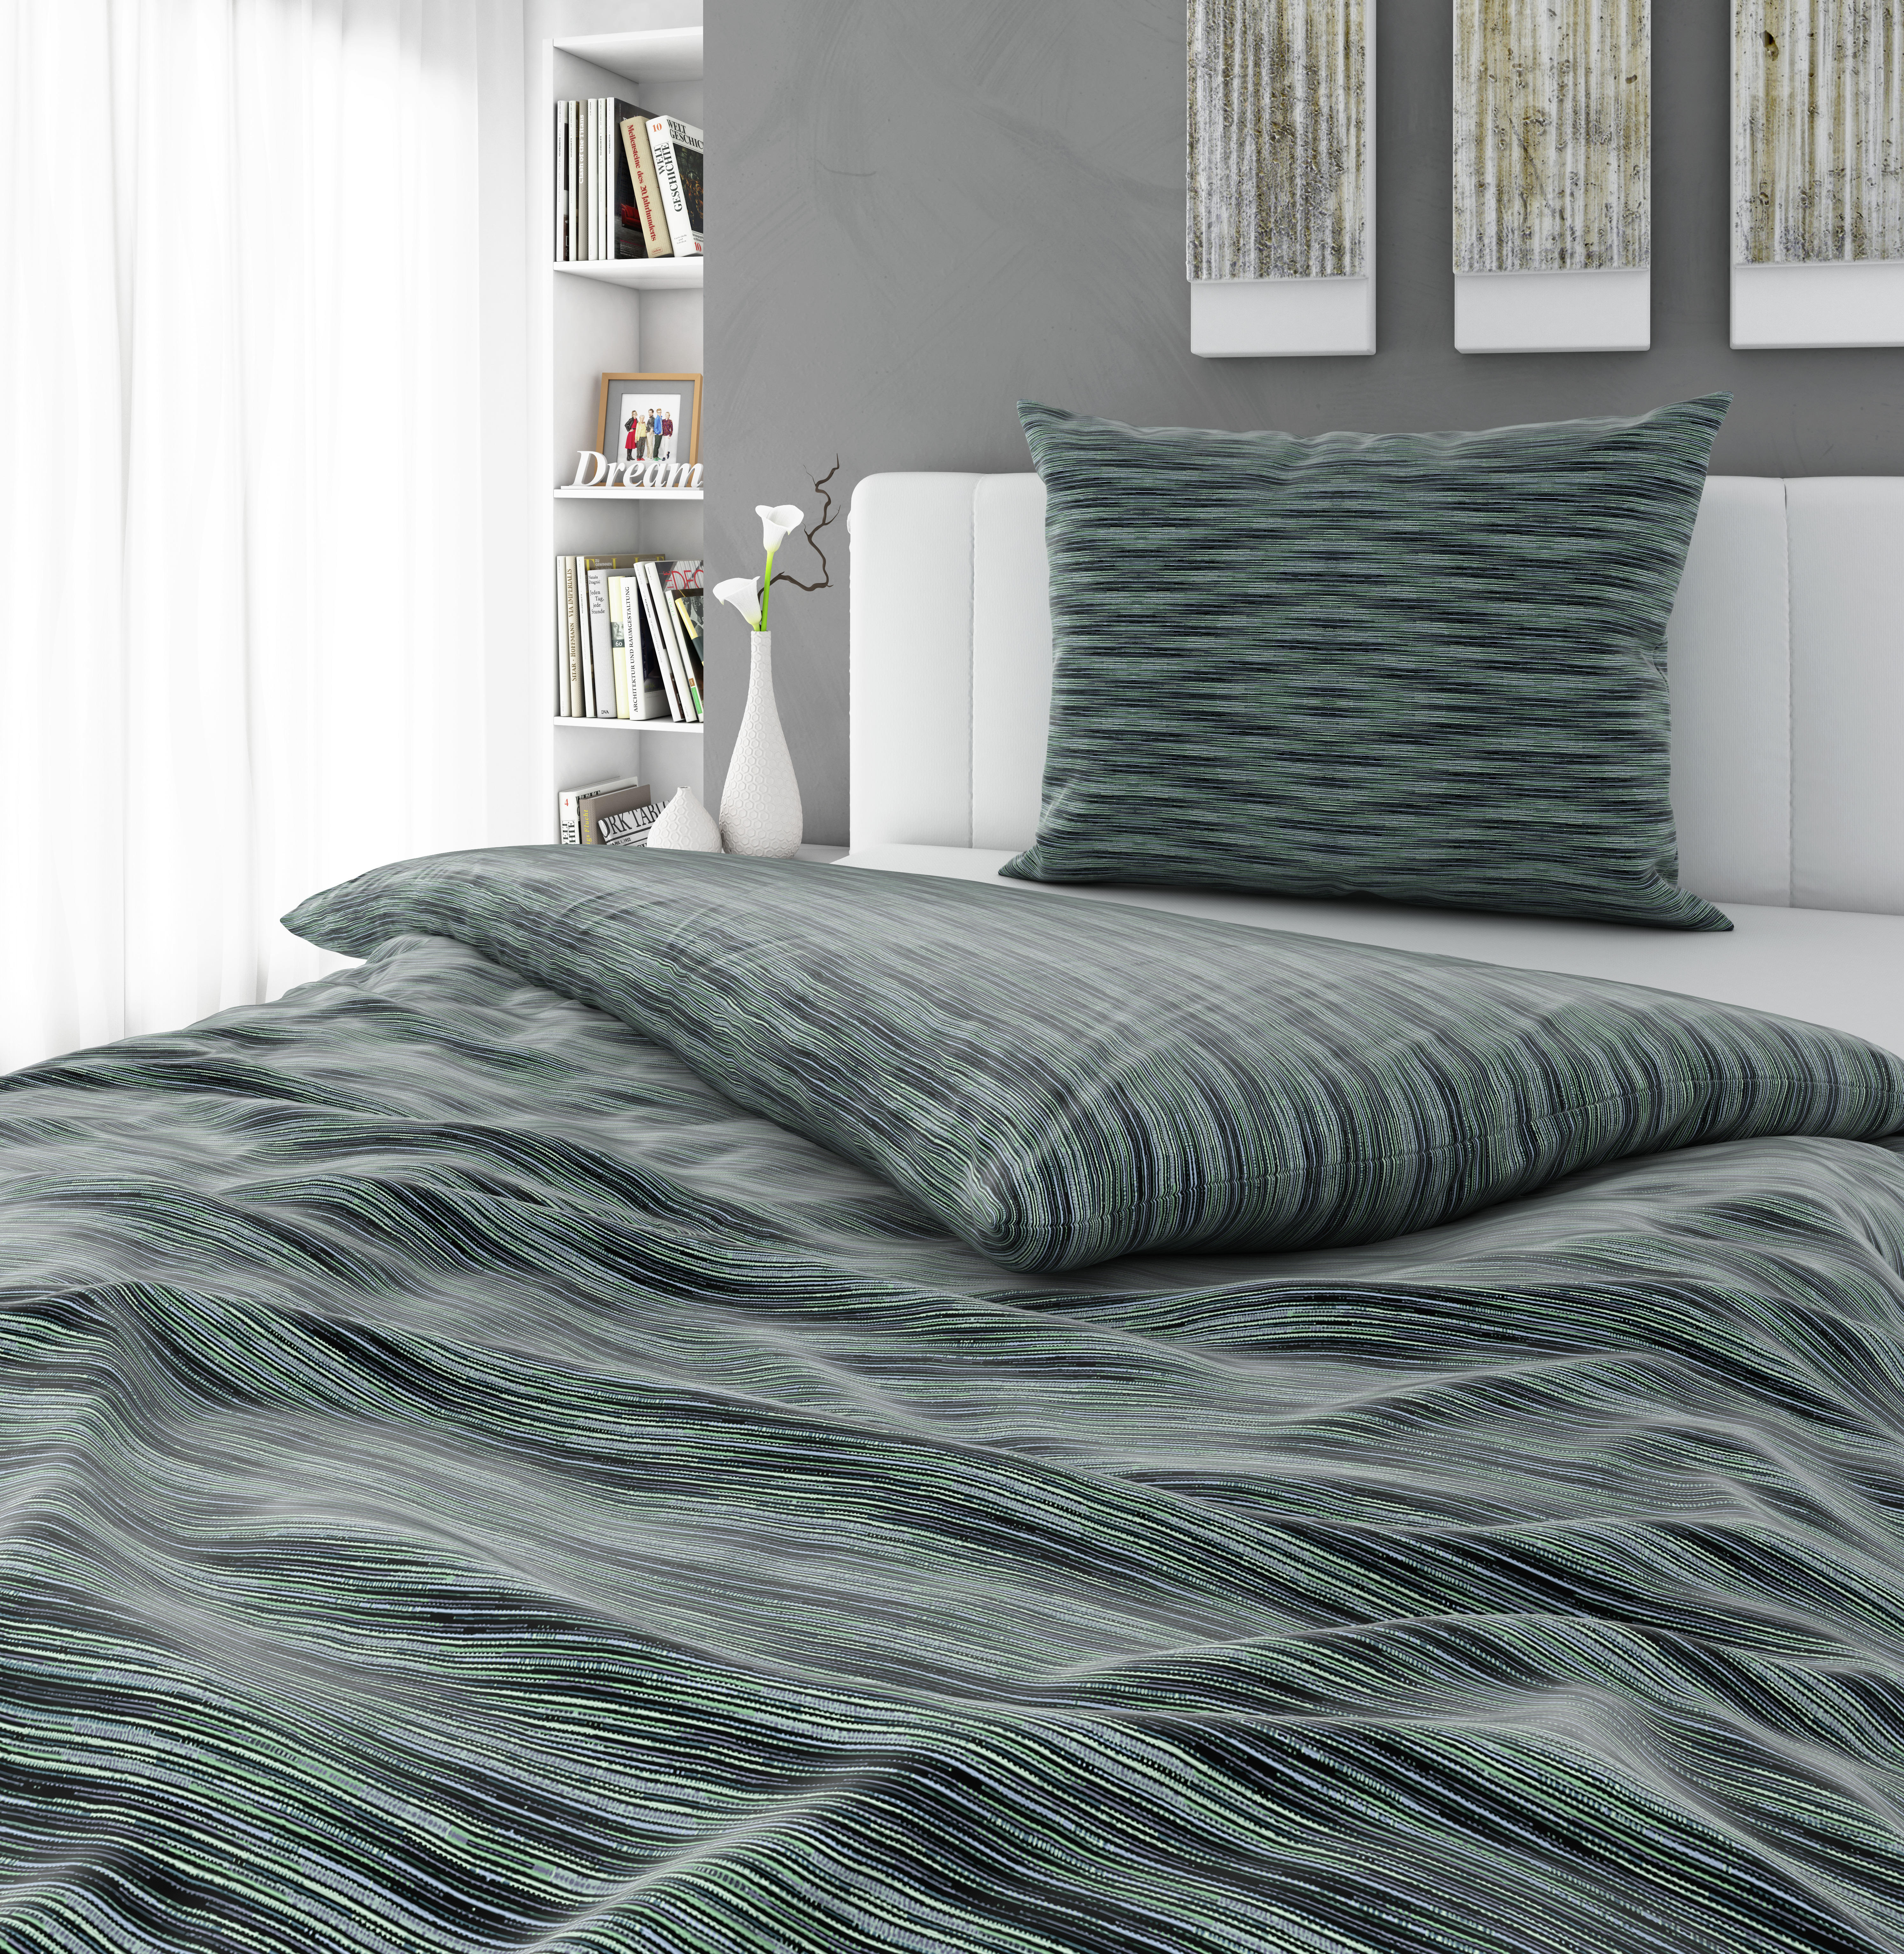 POSTELJINA 140/200 cm  - smaragdno zelena, Basics, tekstil (140/200cm) - Bio:Vio